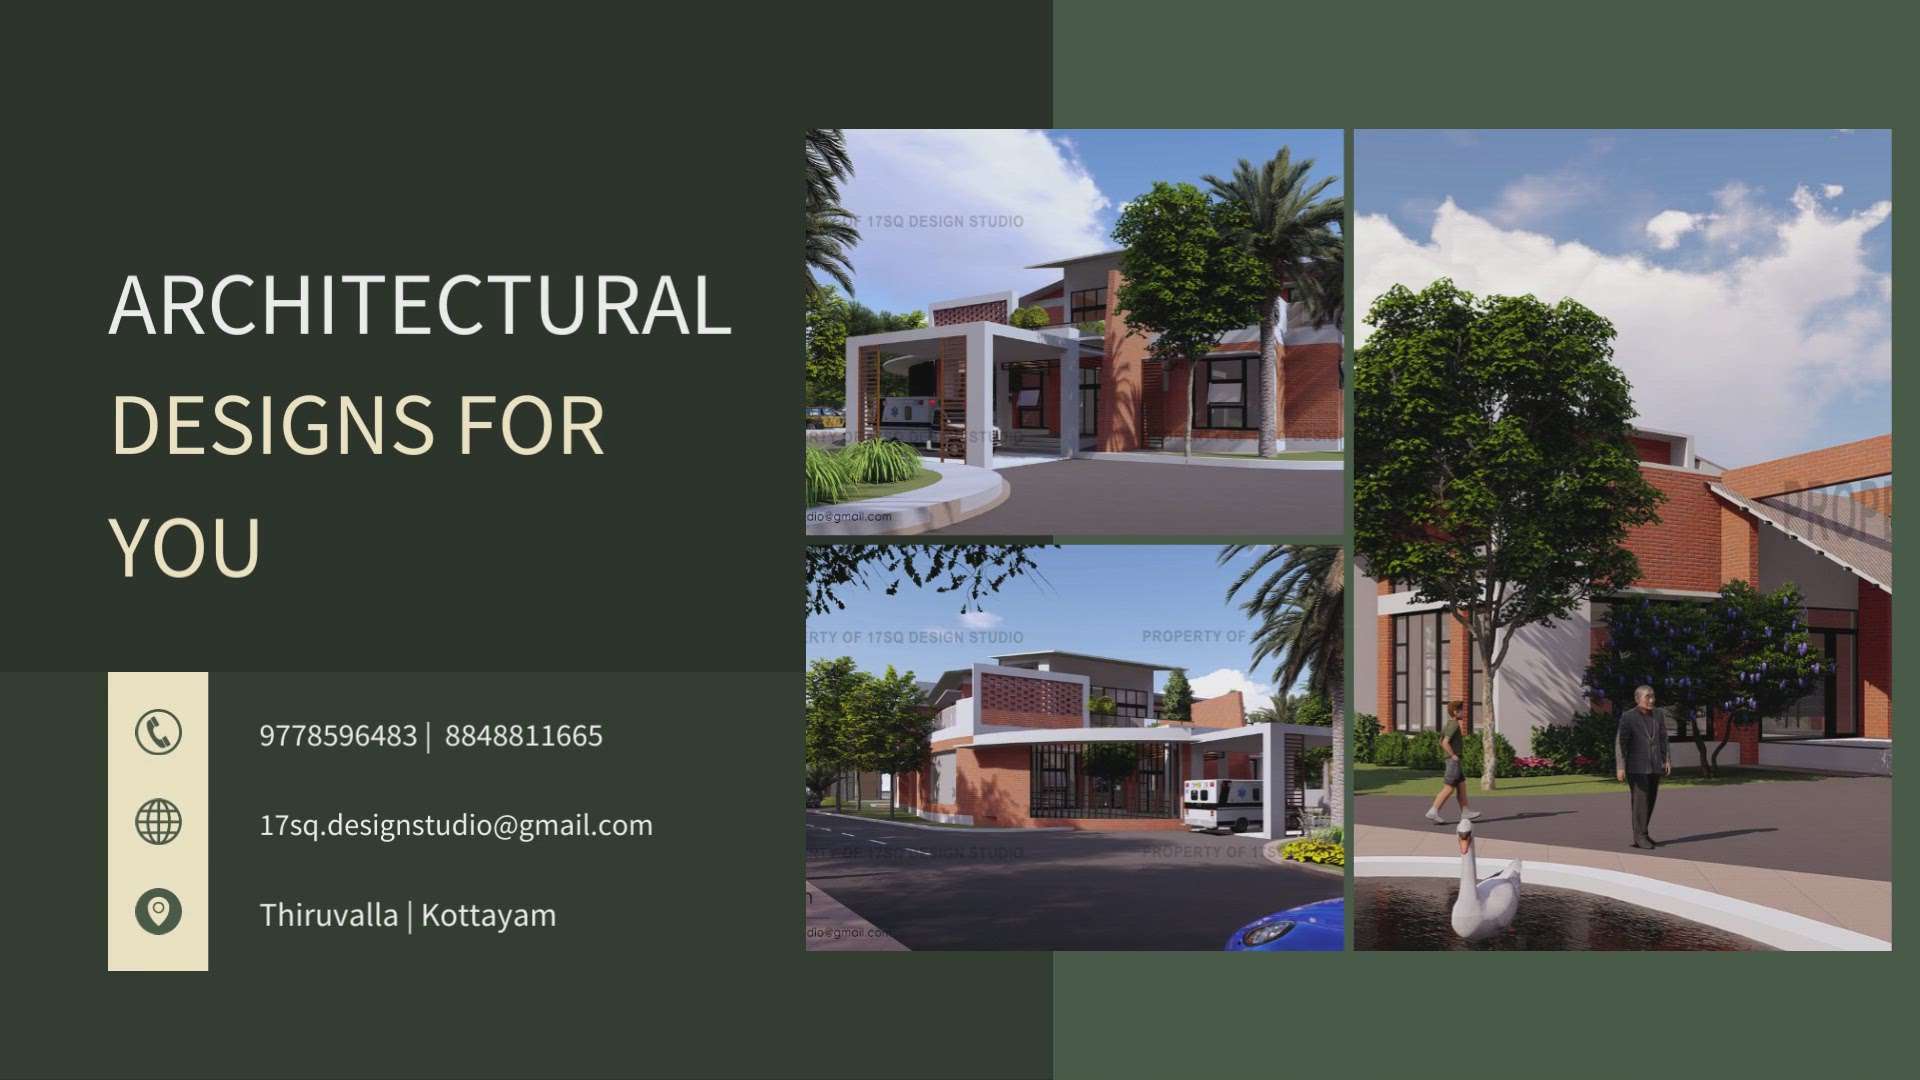 17.sq Design Studio #architecturedesigns #architectureldesigns #InteriorDesigner #KeralaStyleHouse #keralahomedesignz #commercialdesign #modernhome